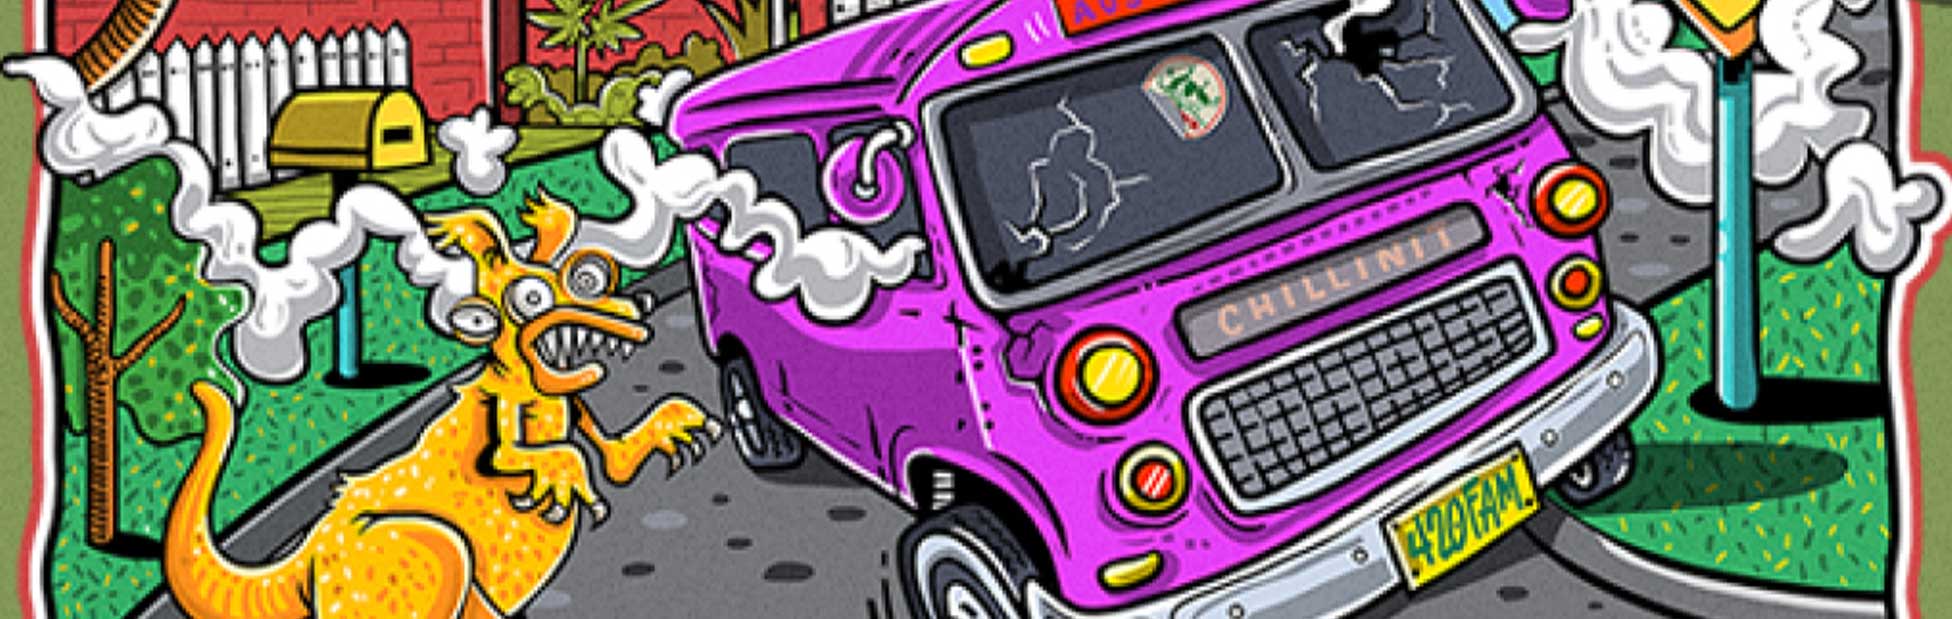 artwork of bus on suburban st